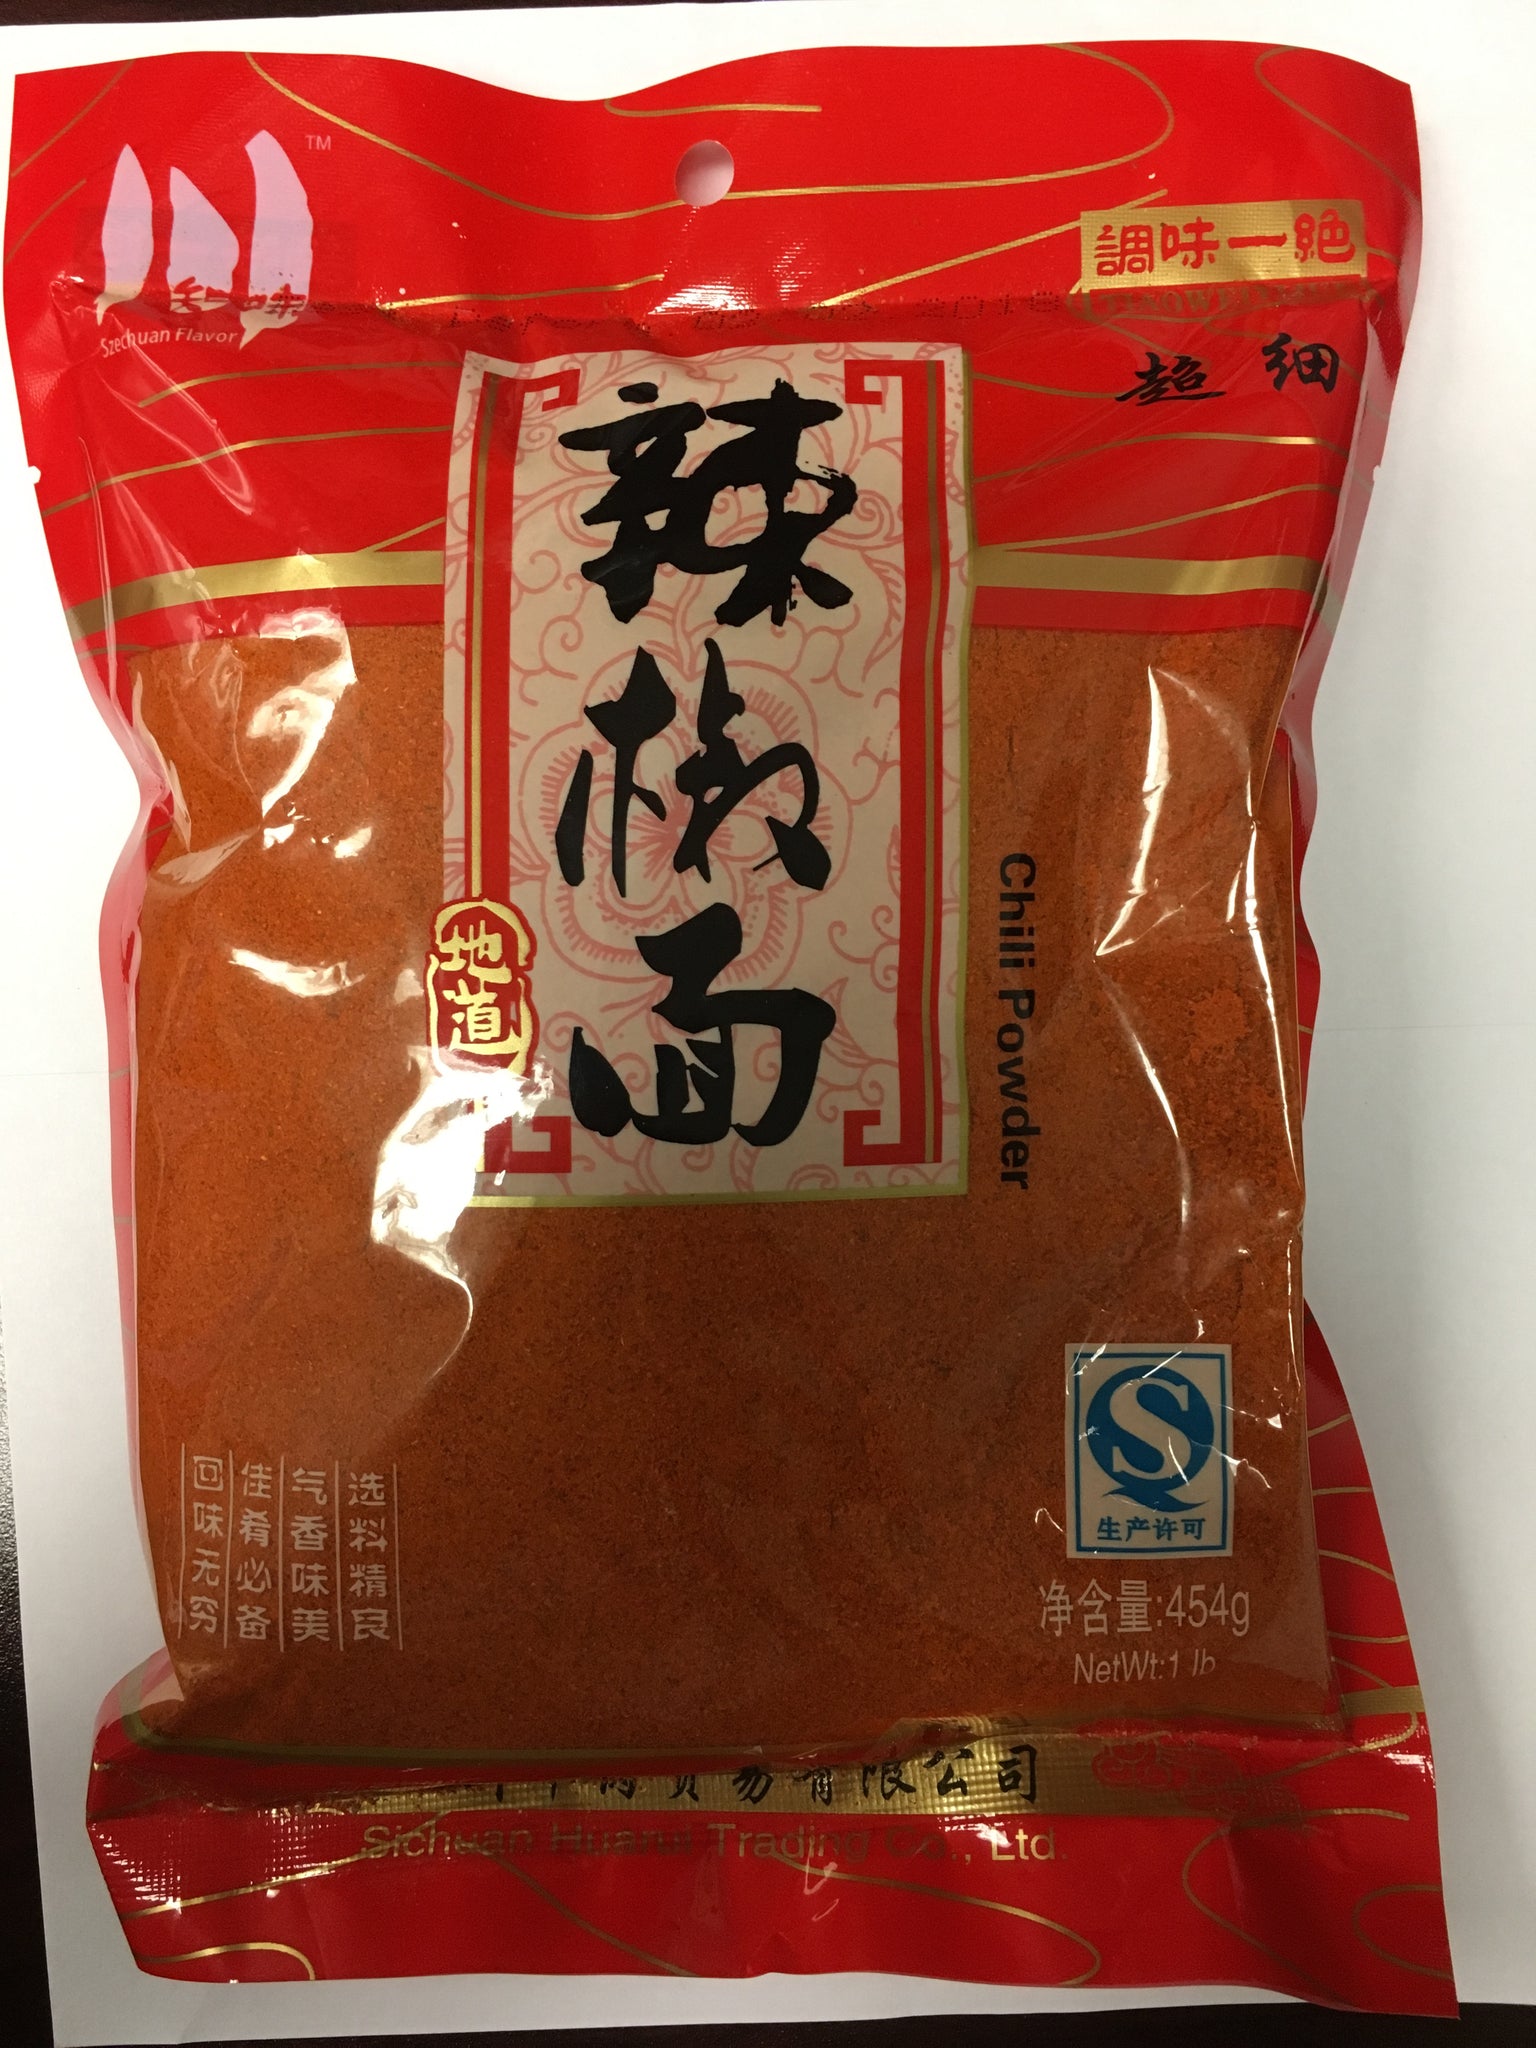 Sichuan Red Chili Powder - Superfine 1lb (454g)